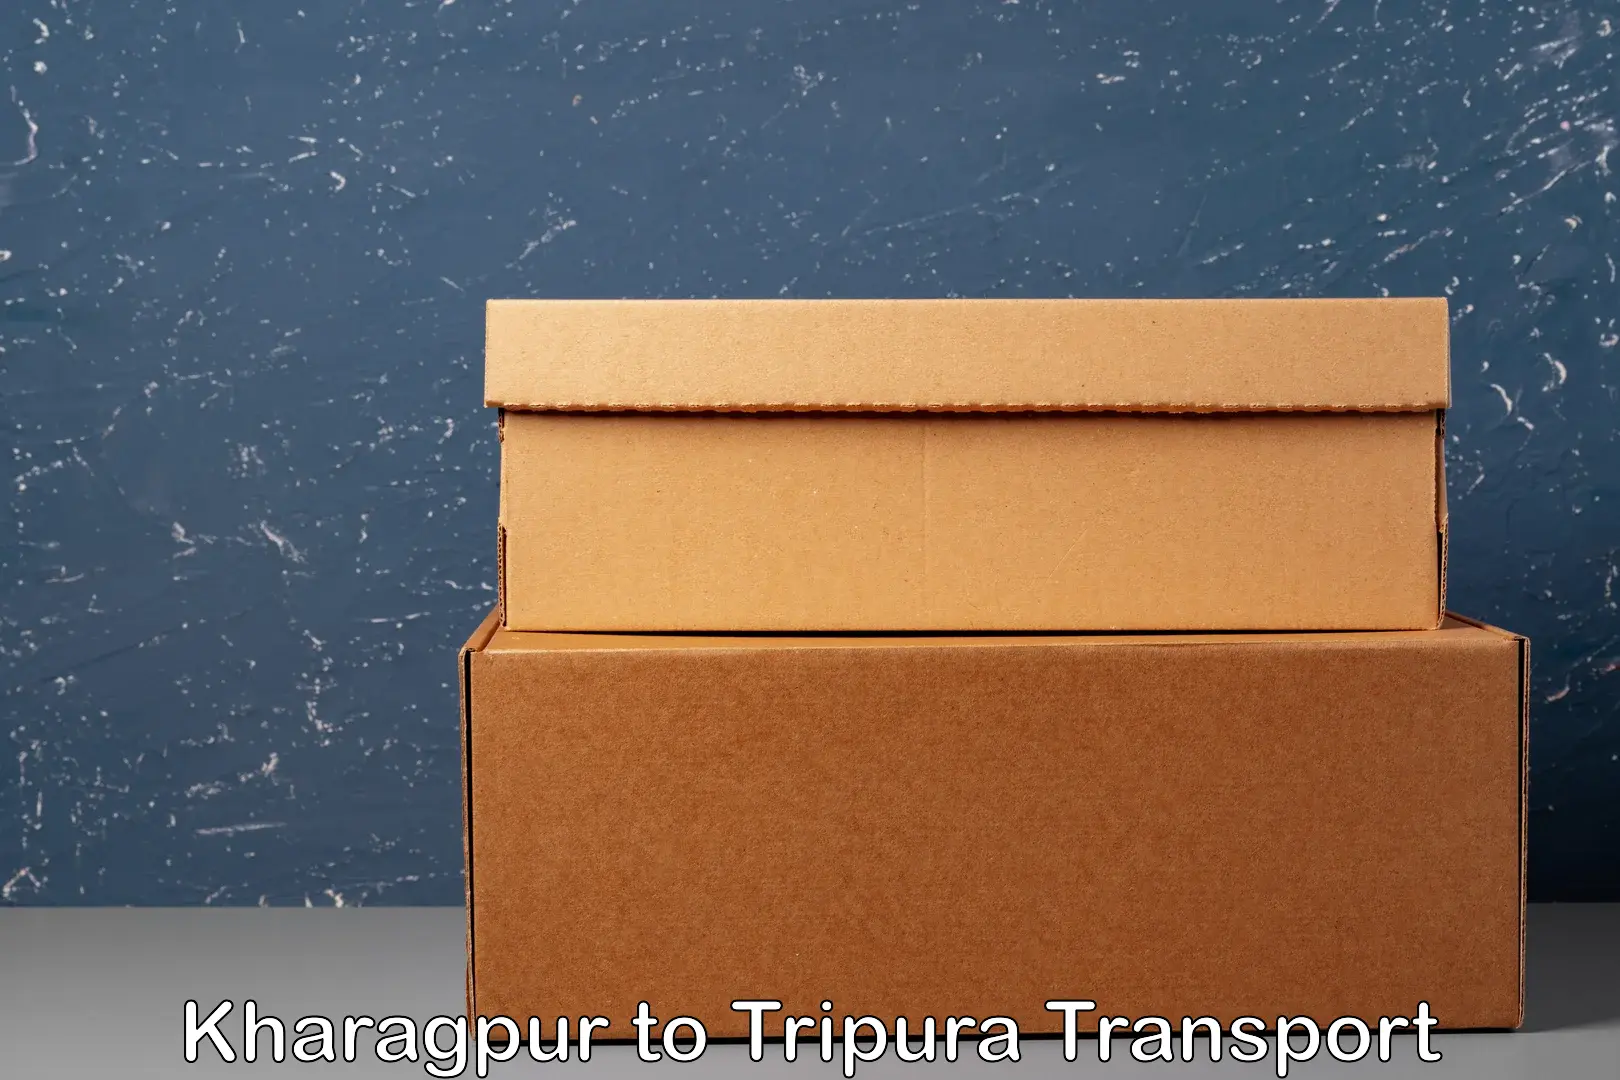 Truck transport companies in India Kharagpur to Agartala